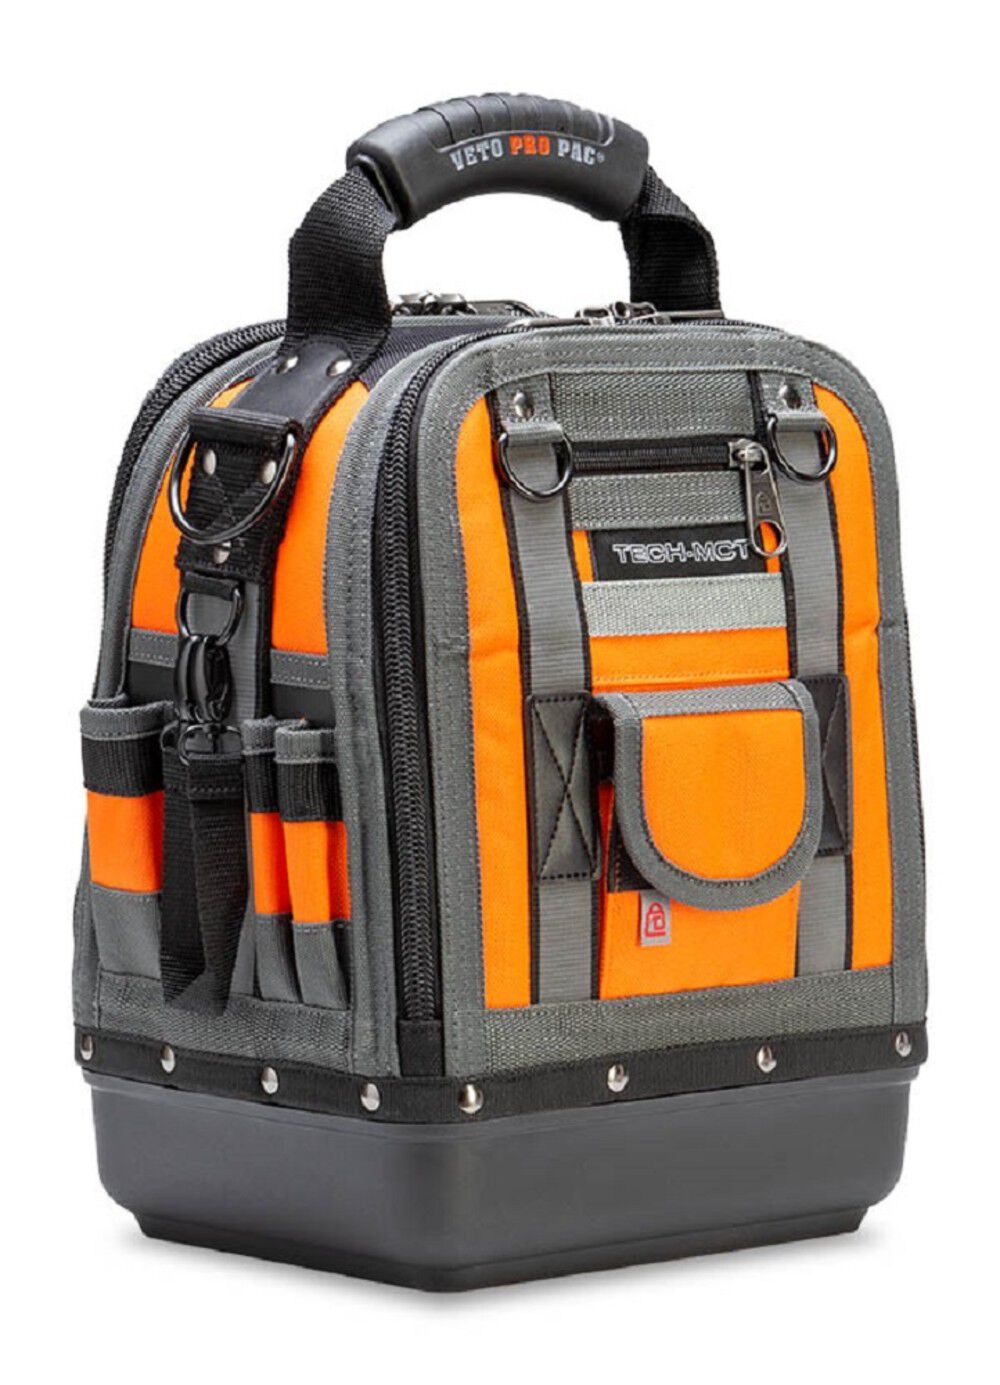 Veto Pro Pac Tech Tool Bag Compact/Tall Hi Viz Orange TECH MCT HI